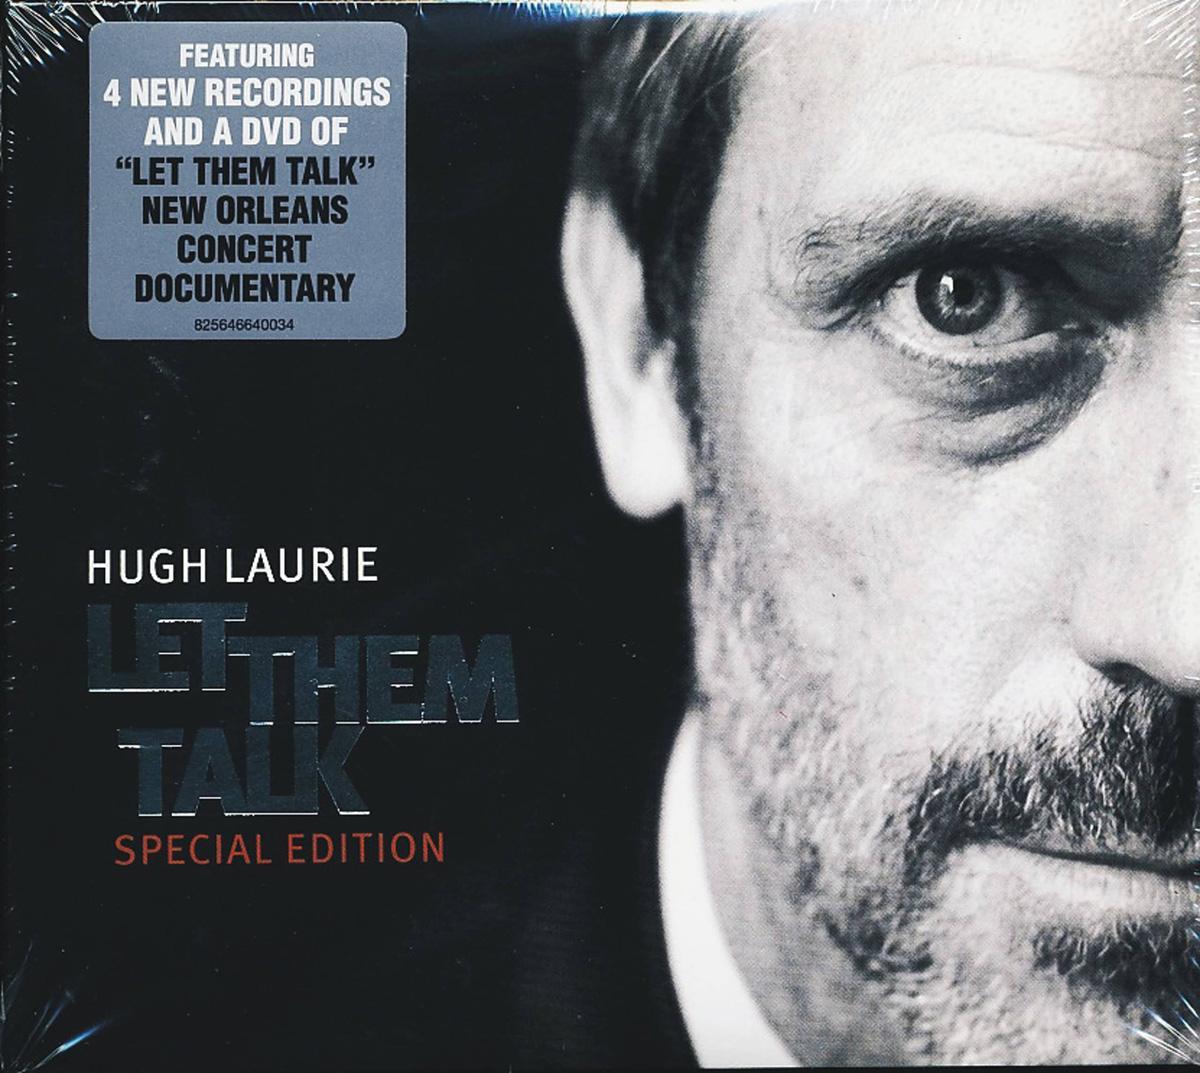 Hugh Laurie - album "Let Them Talk" 